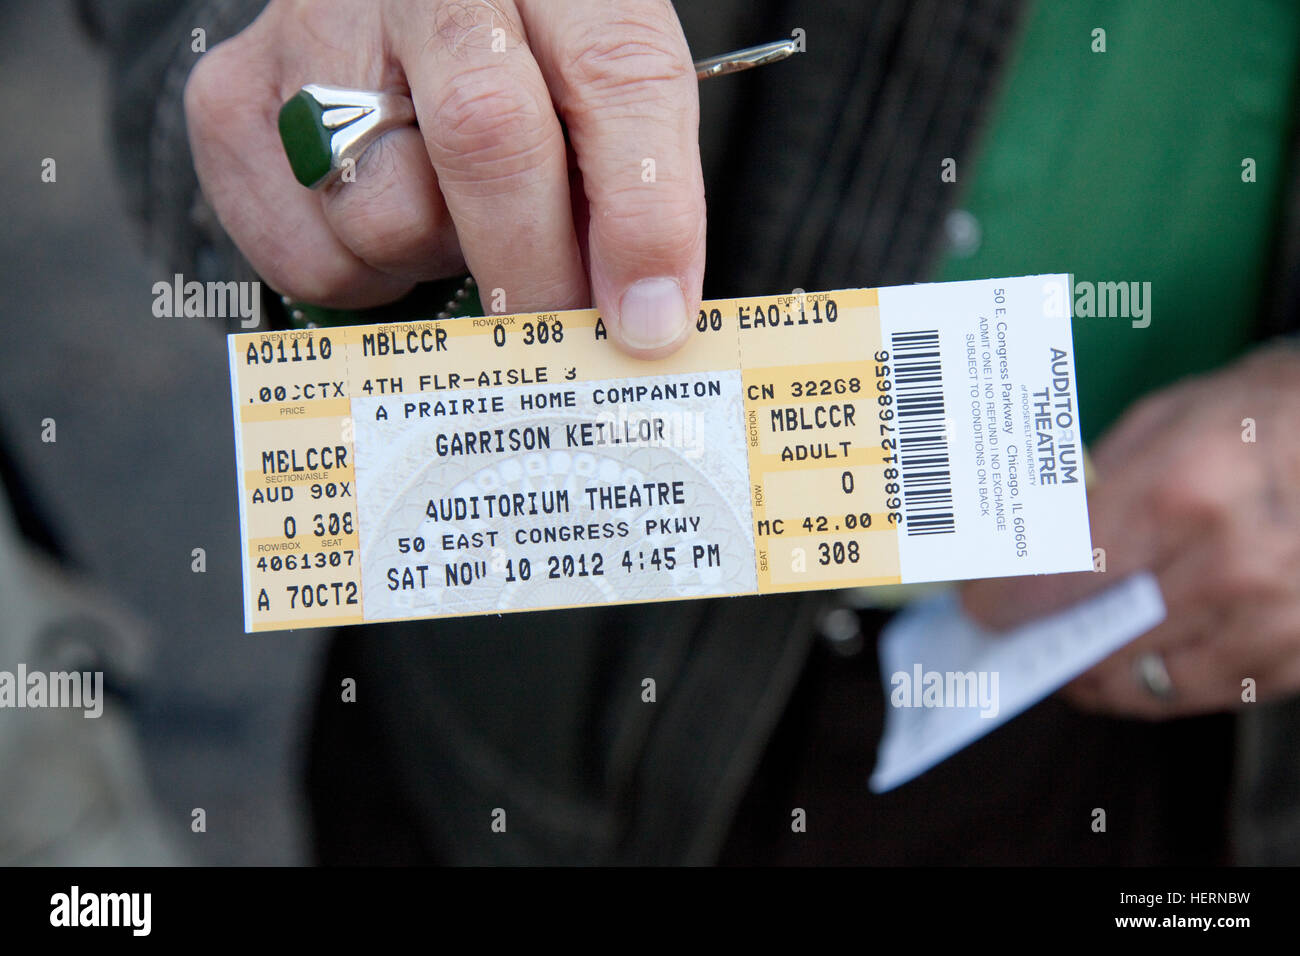 Holding ticket for Prairie Home Companion show starring Garrison Keillor at the Auditorium Theatre. Chicago Illinois IL USA Stock Photo